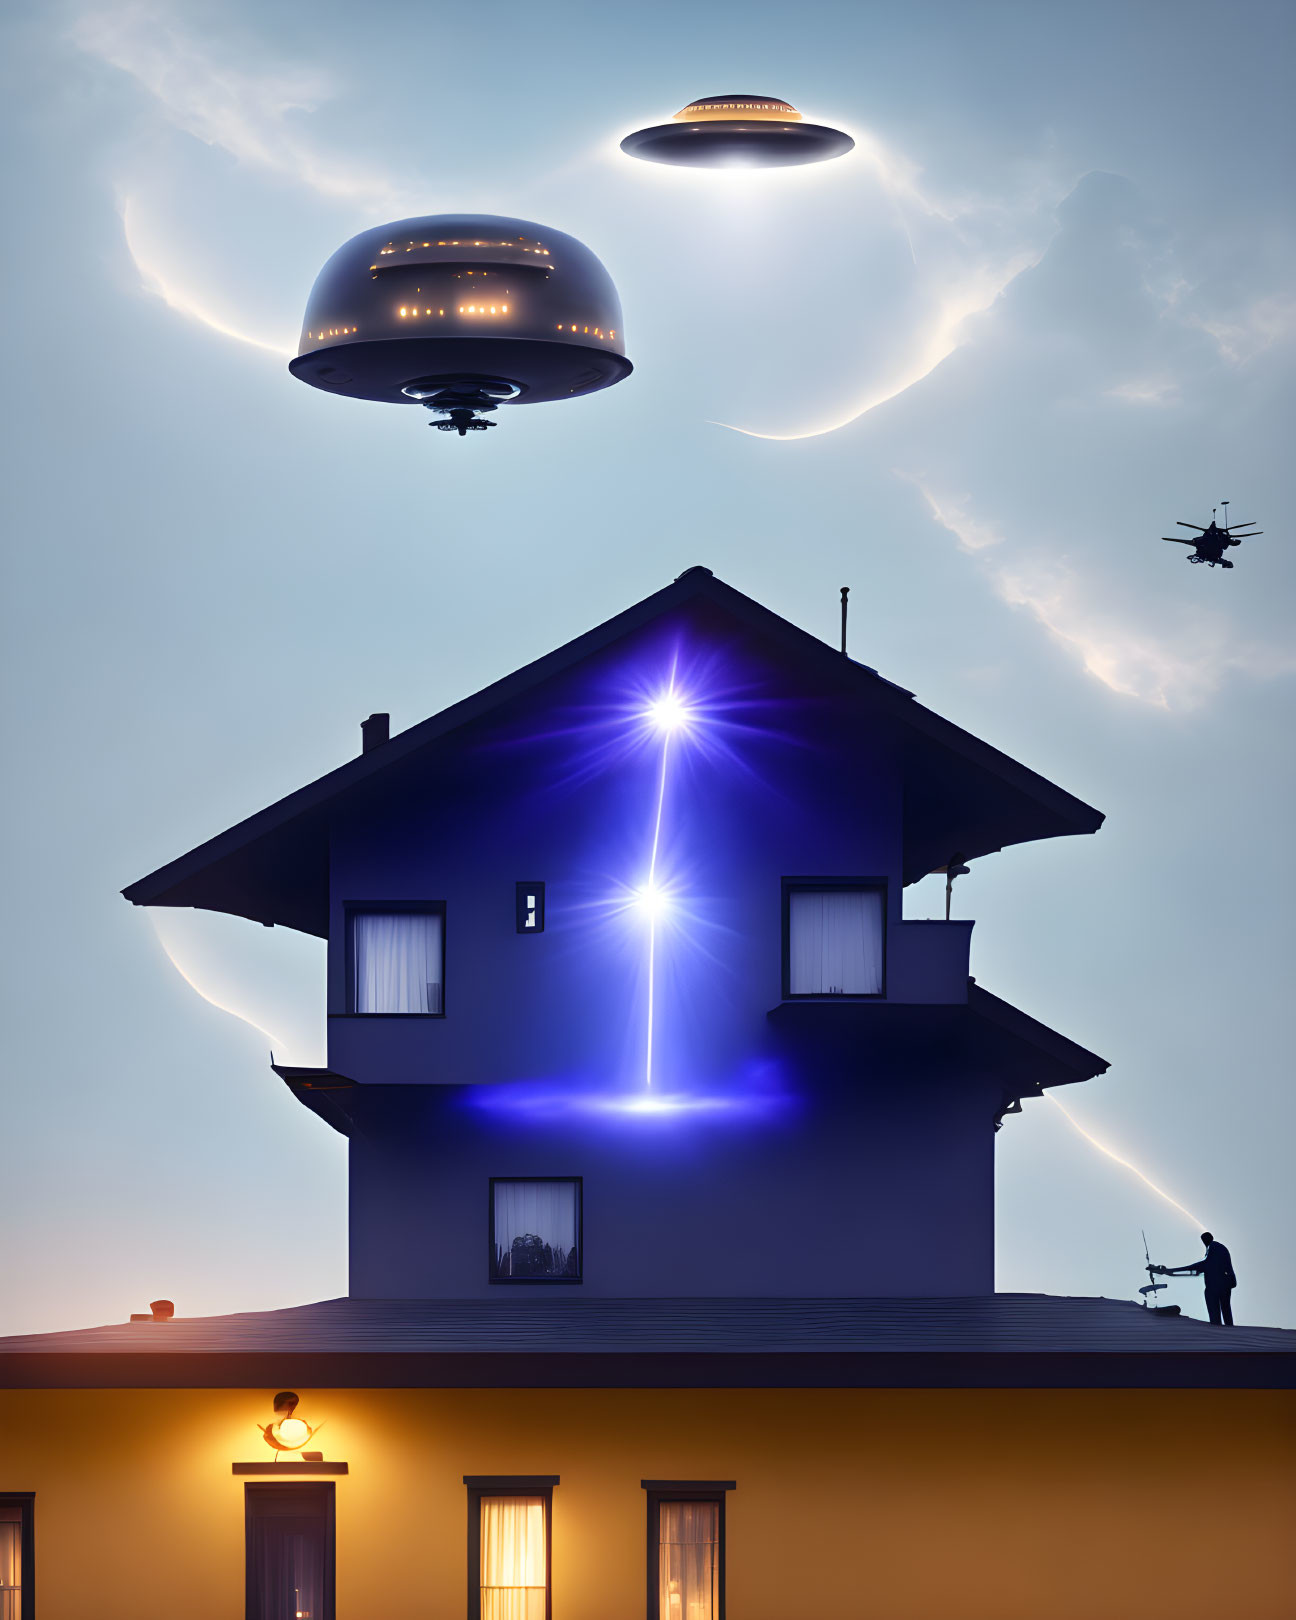 Surreal twilight scene: house, person, UFOs, drones, eerie blue light